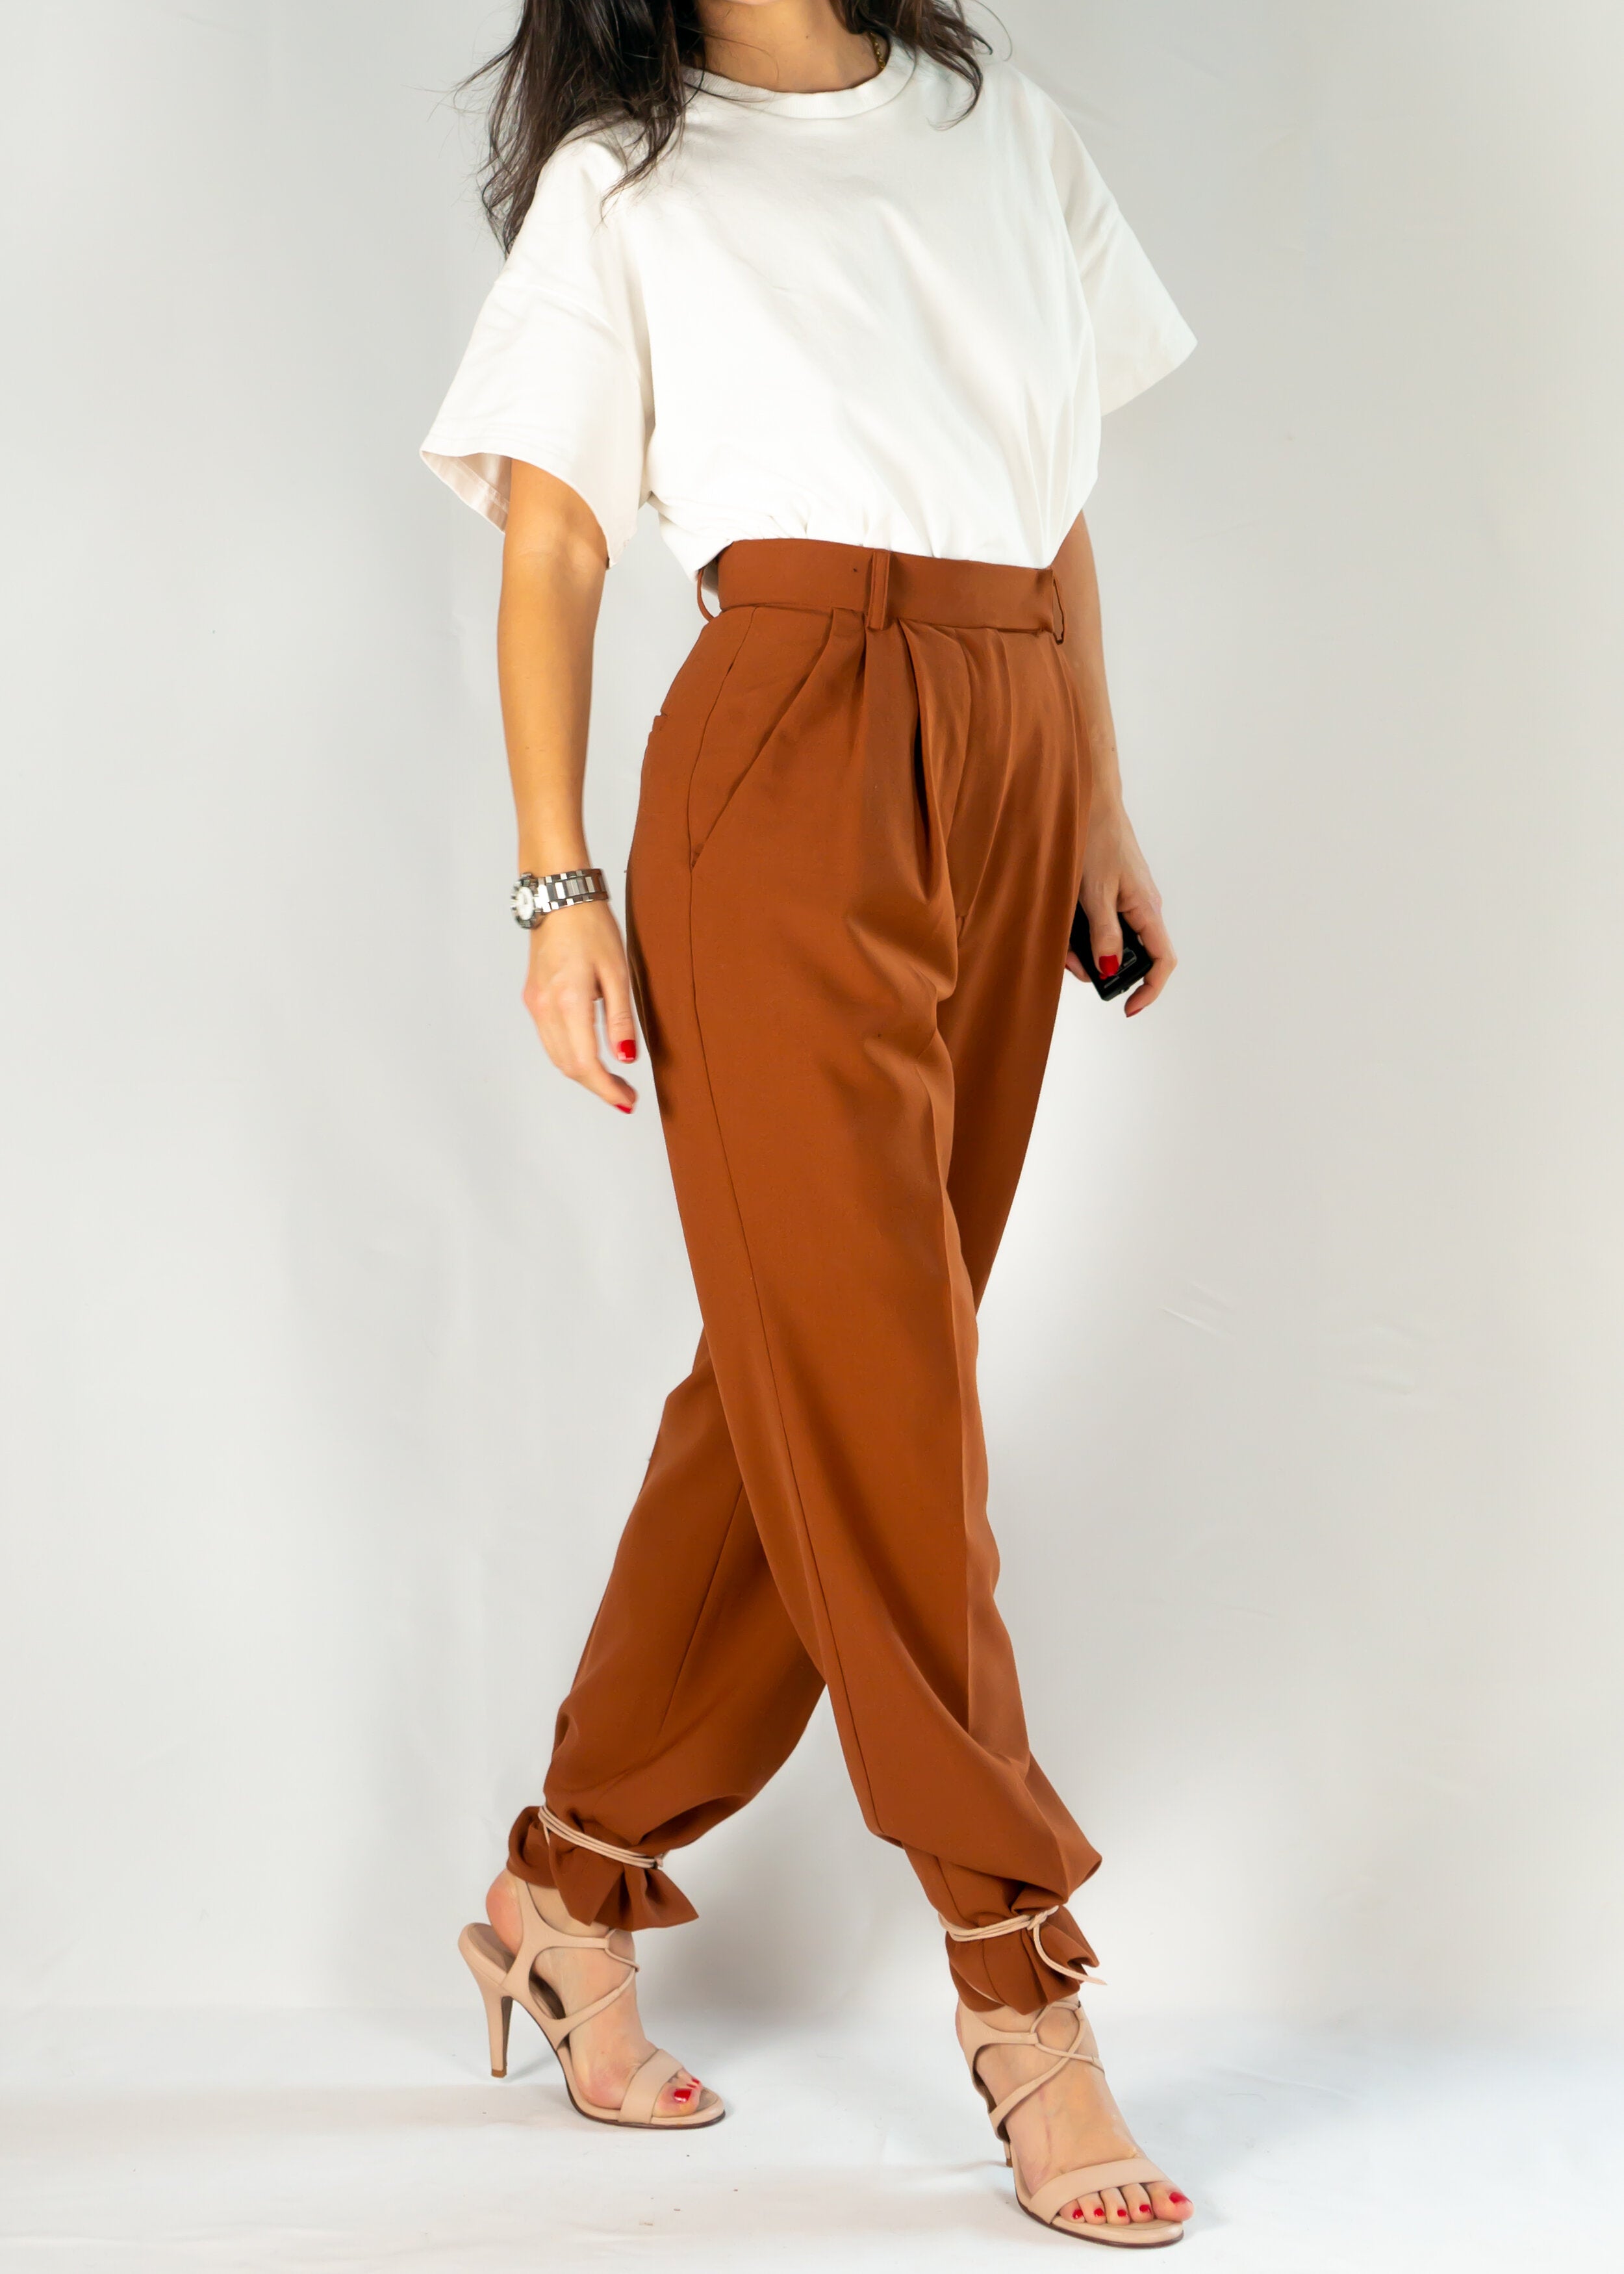 Linen Paper Bag Pants ALEXA / High Waisted Linen Trousers / Tapered Linen  Pants - Etsy Singapore